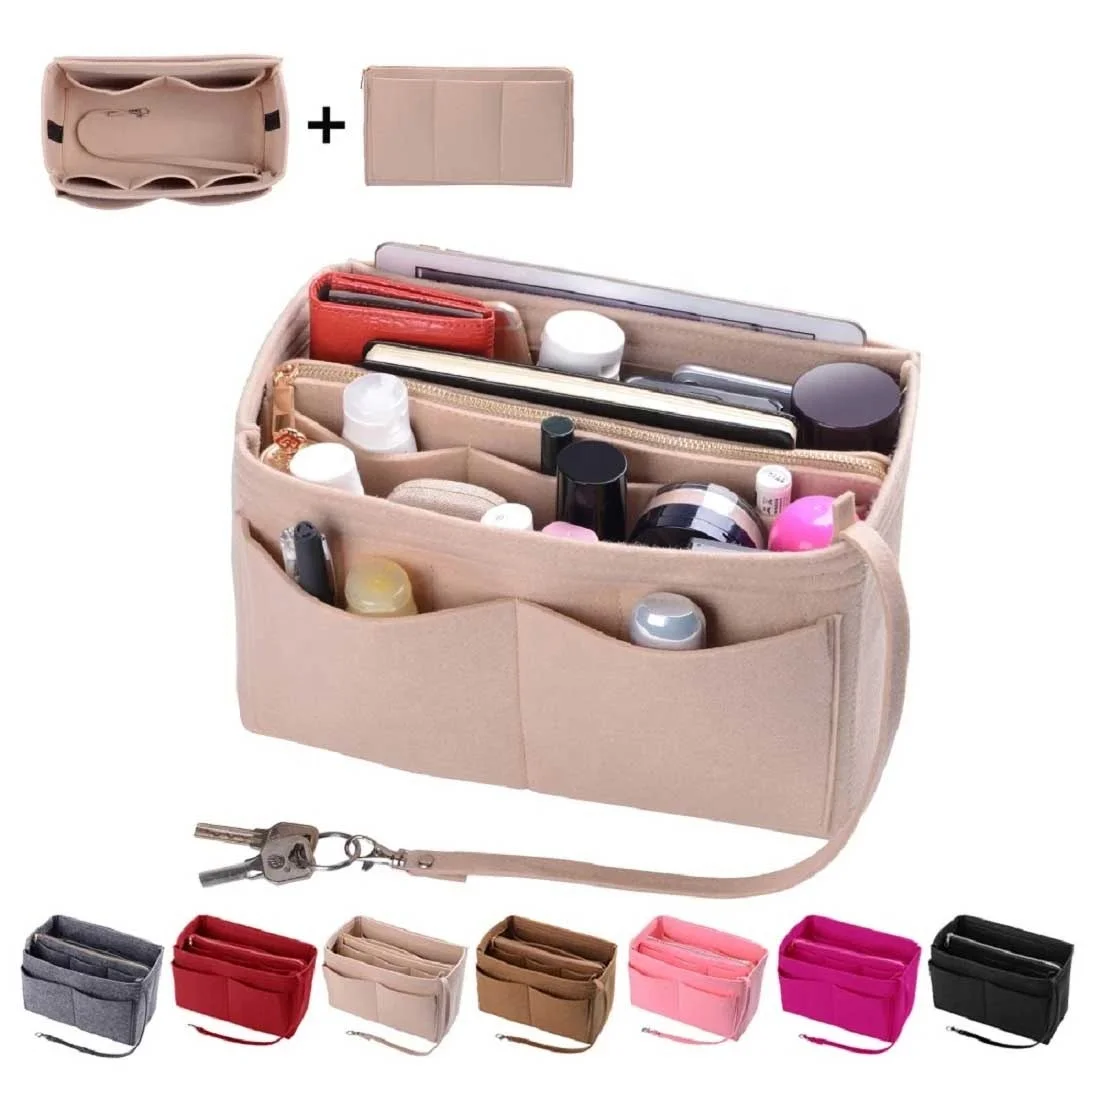 

BO-A001D 2021 Custom Felt cosmetic organizer Purse Insert Handbag Organizer Bag in Bag Organizer, Customized color